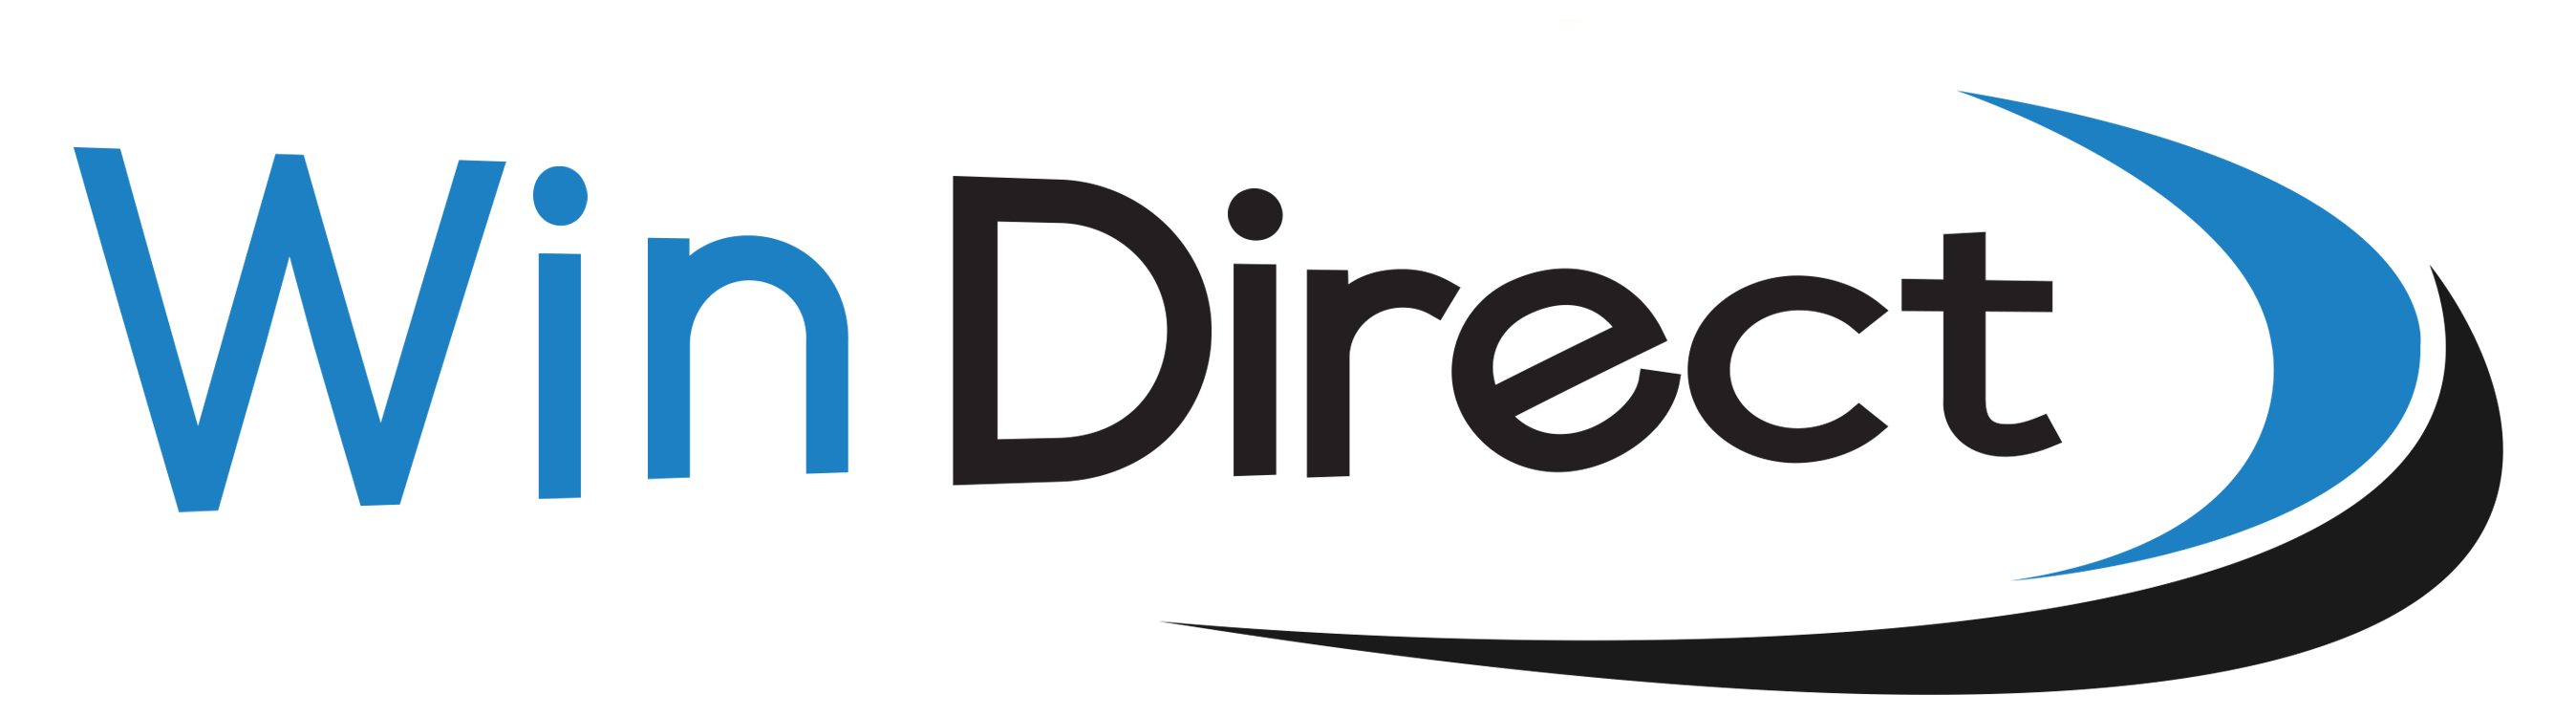 win-direct-finestre-logo